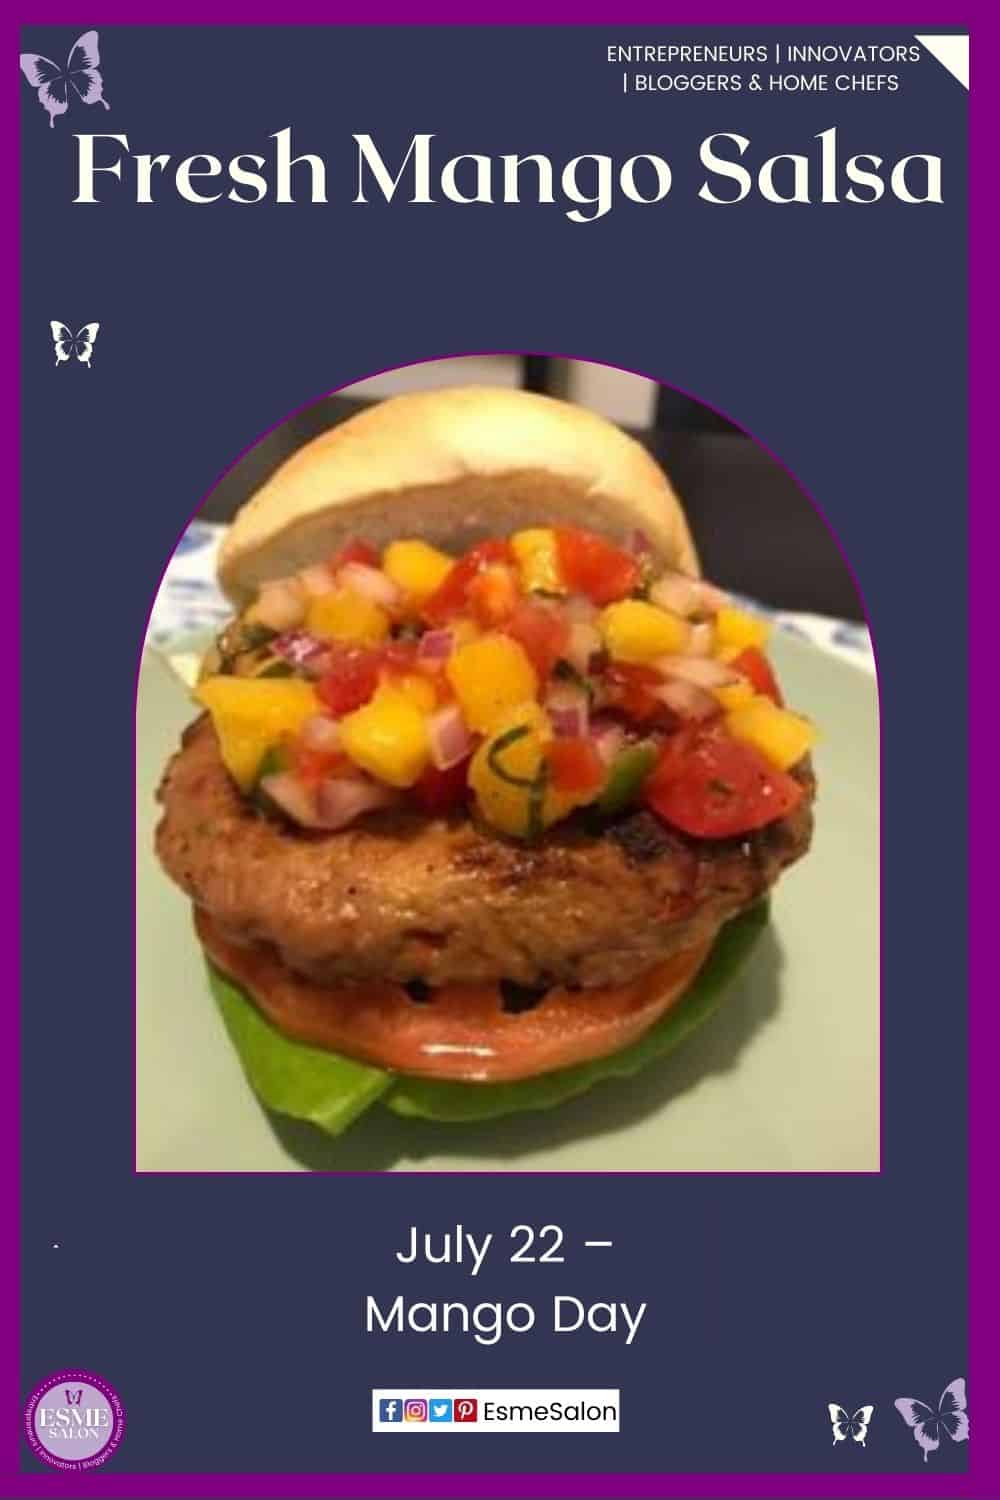 an image of Fresh Mango Salsa topped on a patty in a hamburger bun